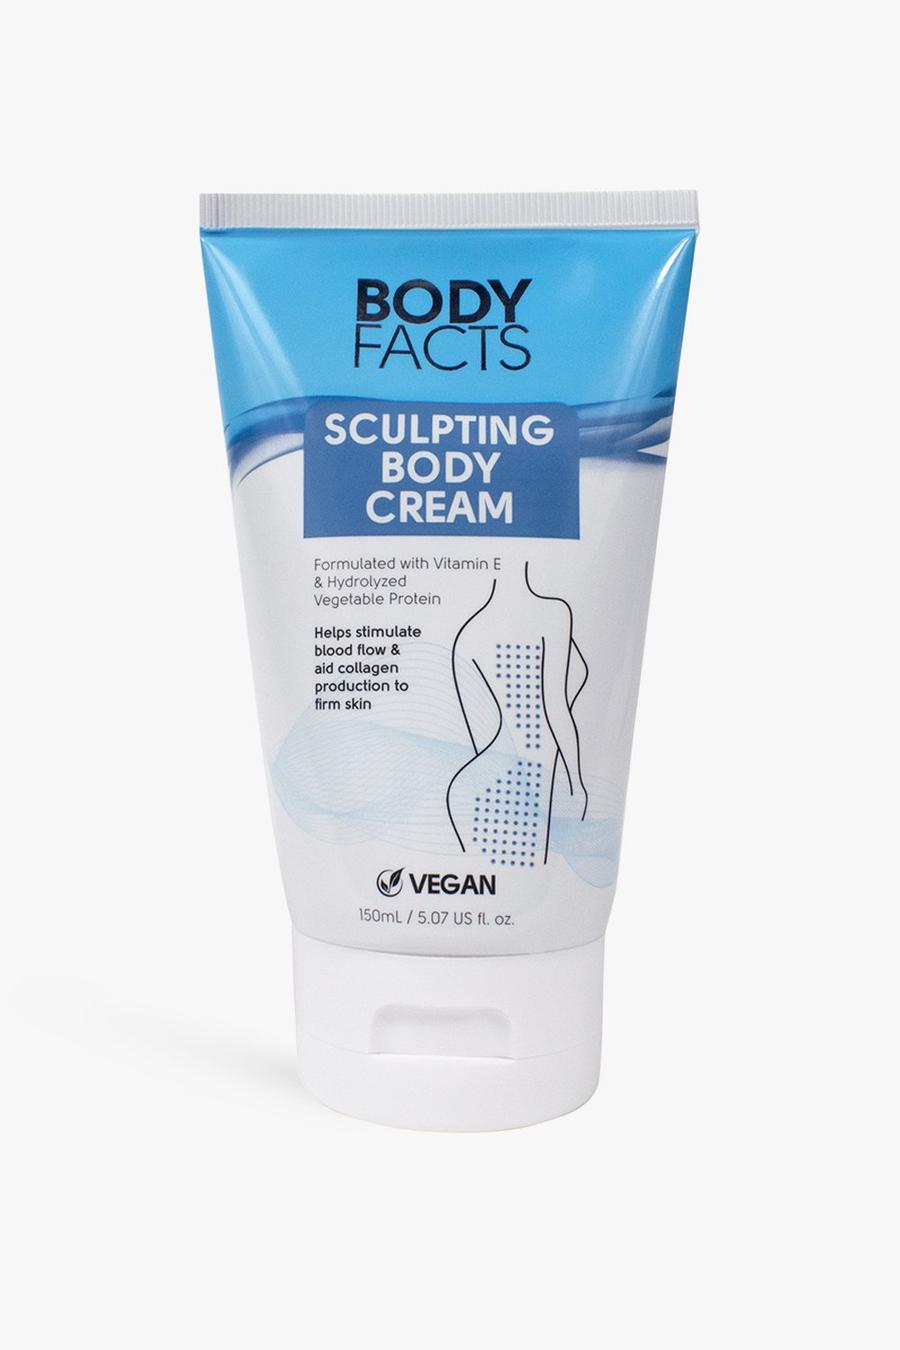 Blue Body Facts Sculpting Body Cream